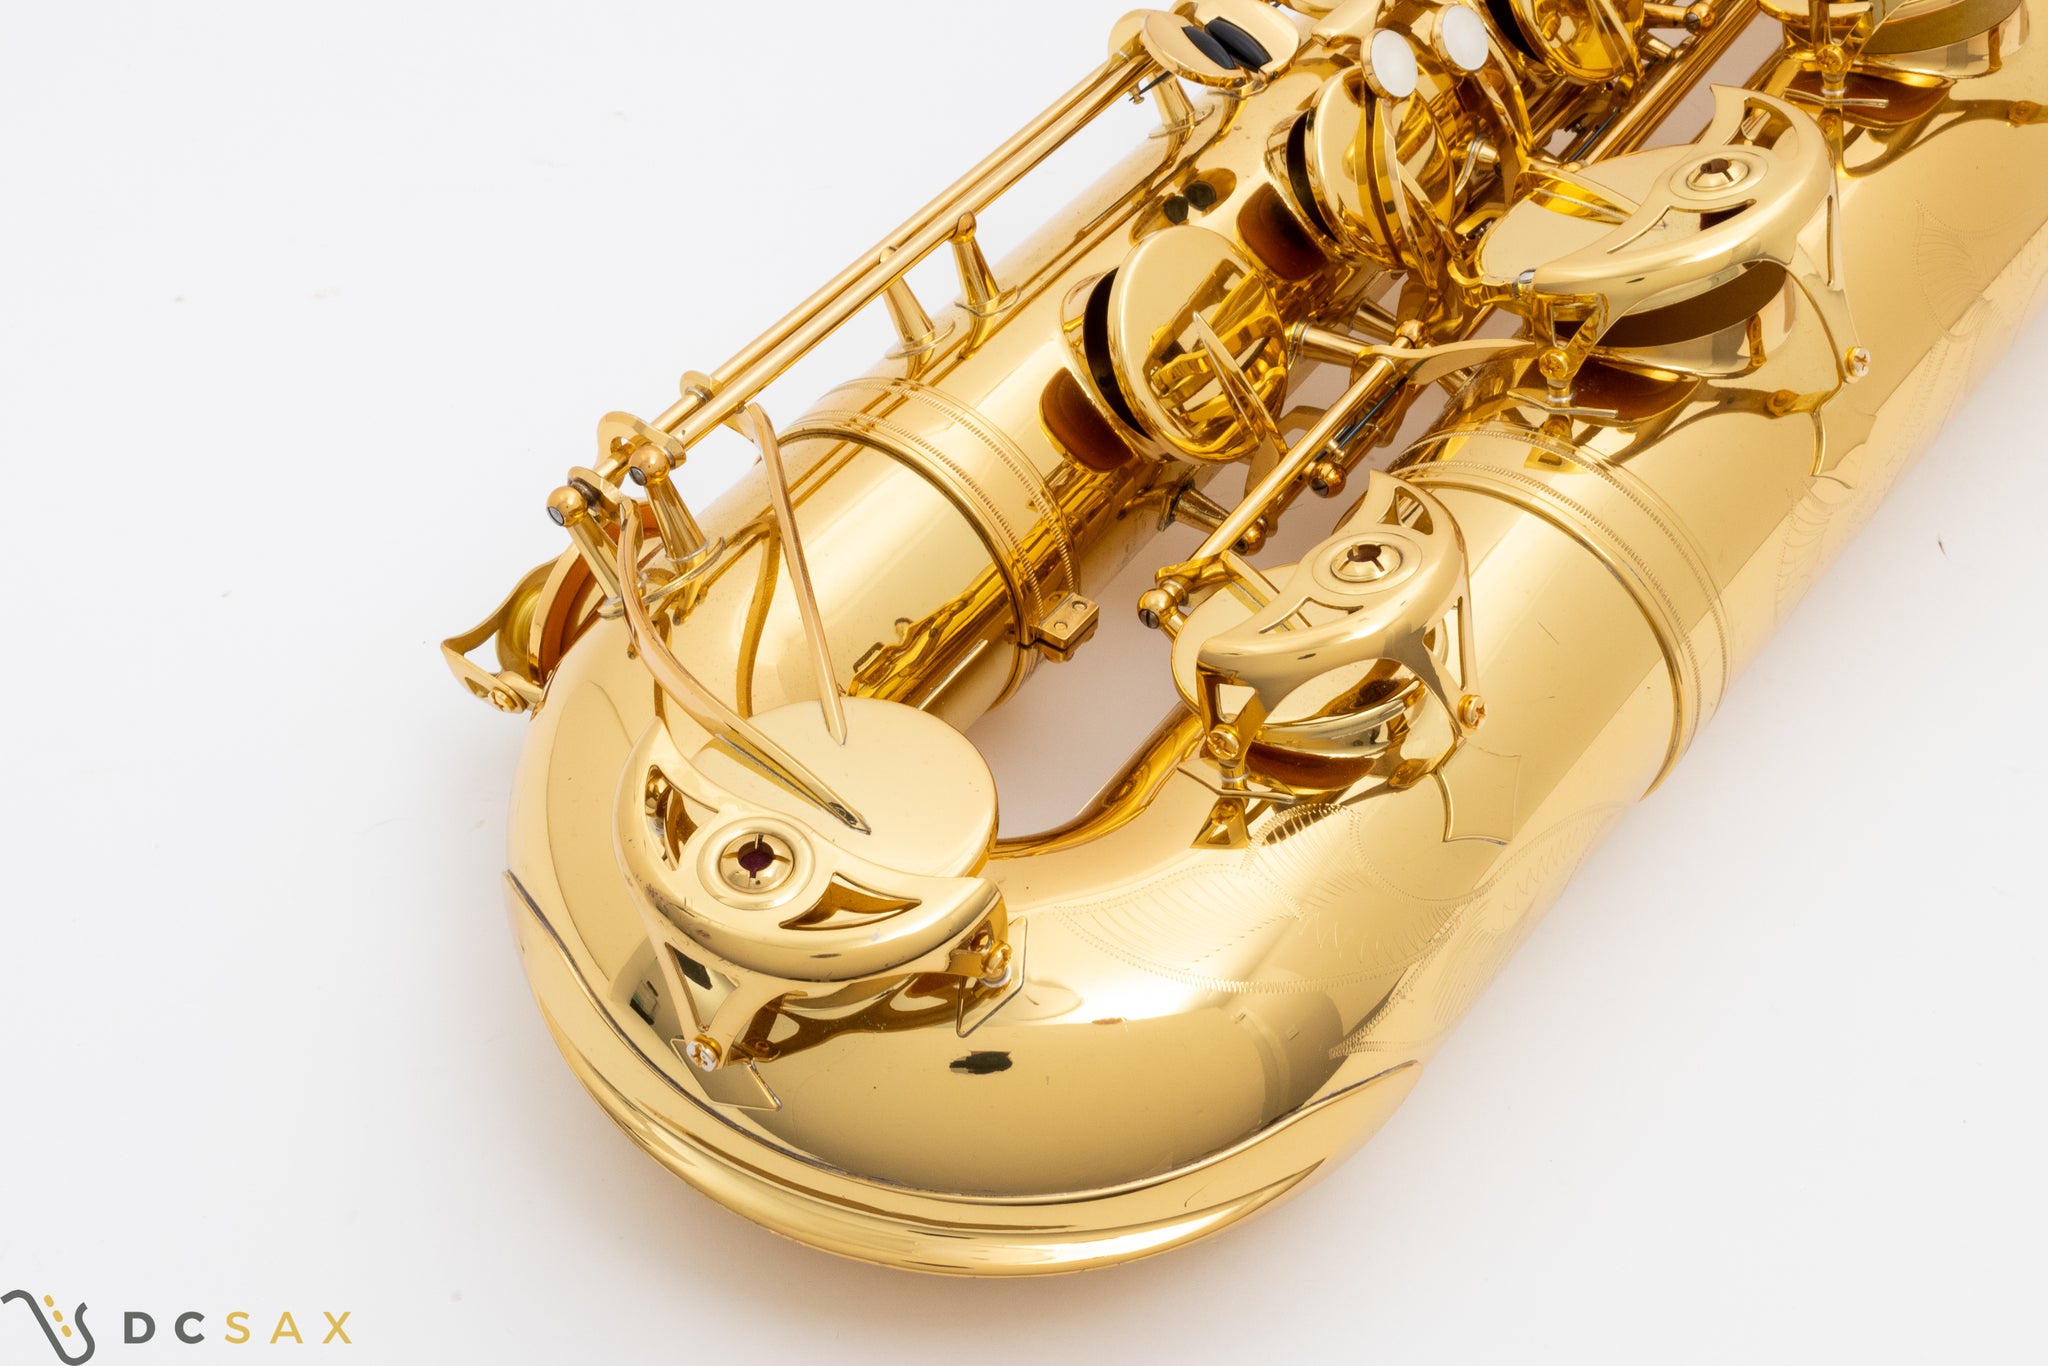 Yamaha YBS-62 Baritone Saxophone